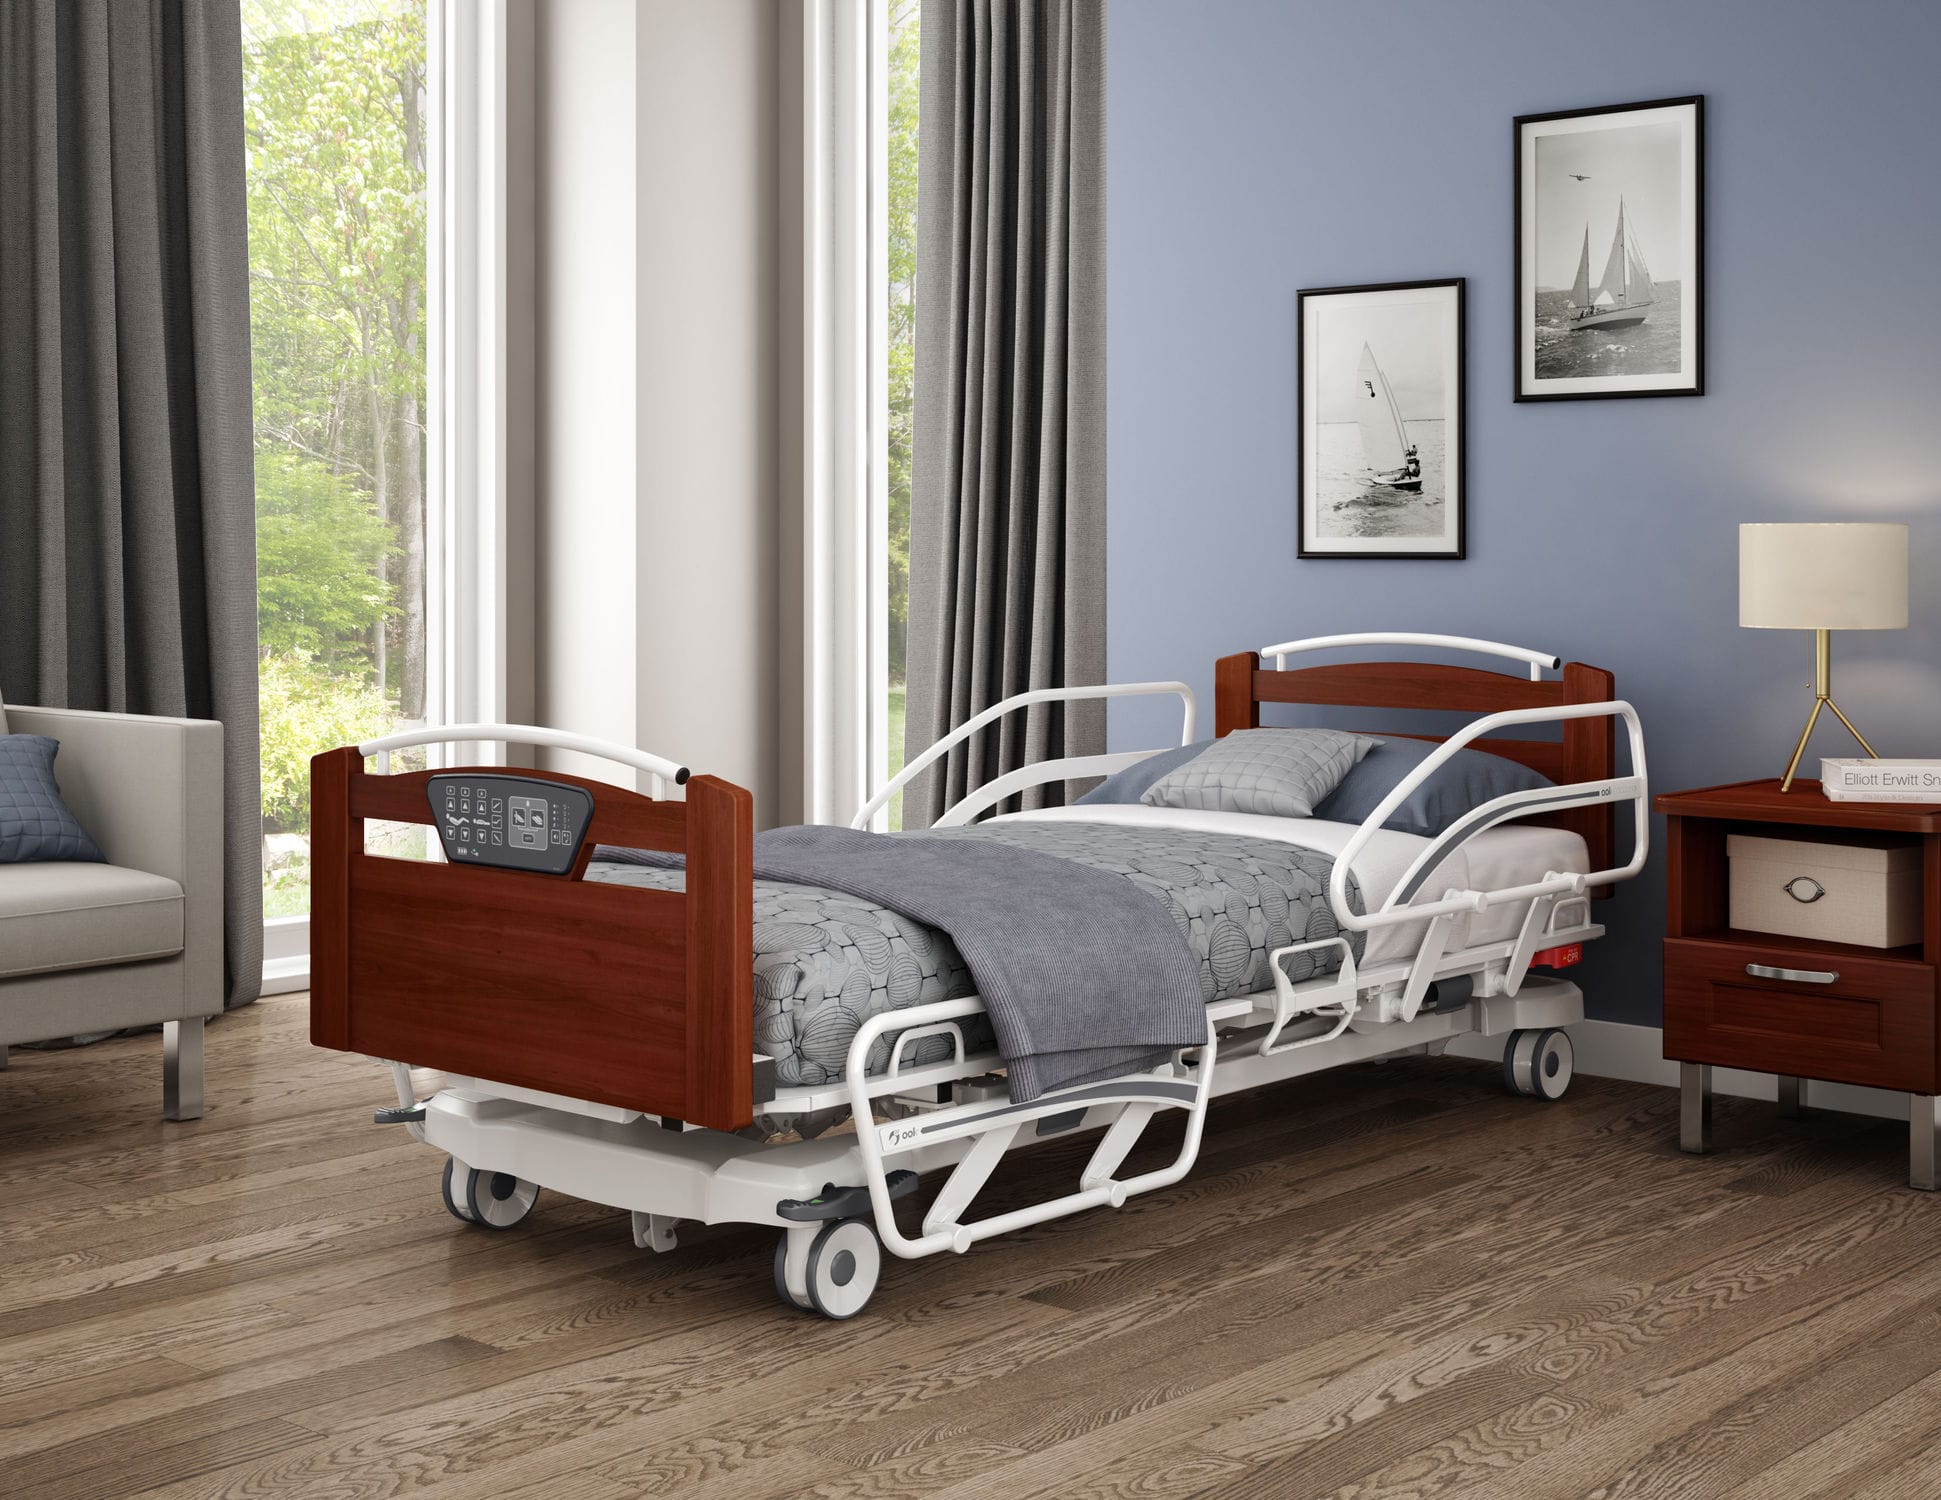 full size hospital bed mattress